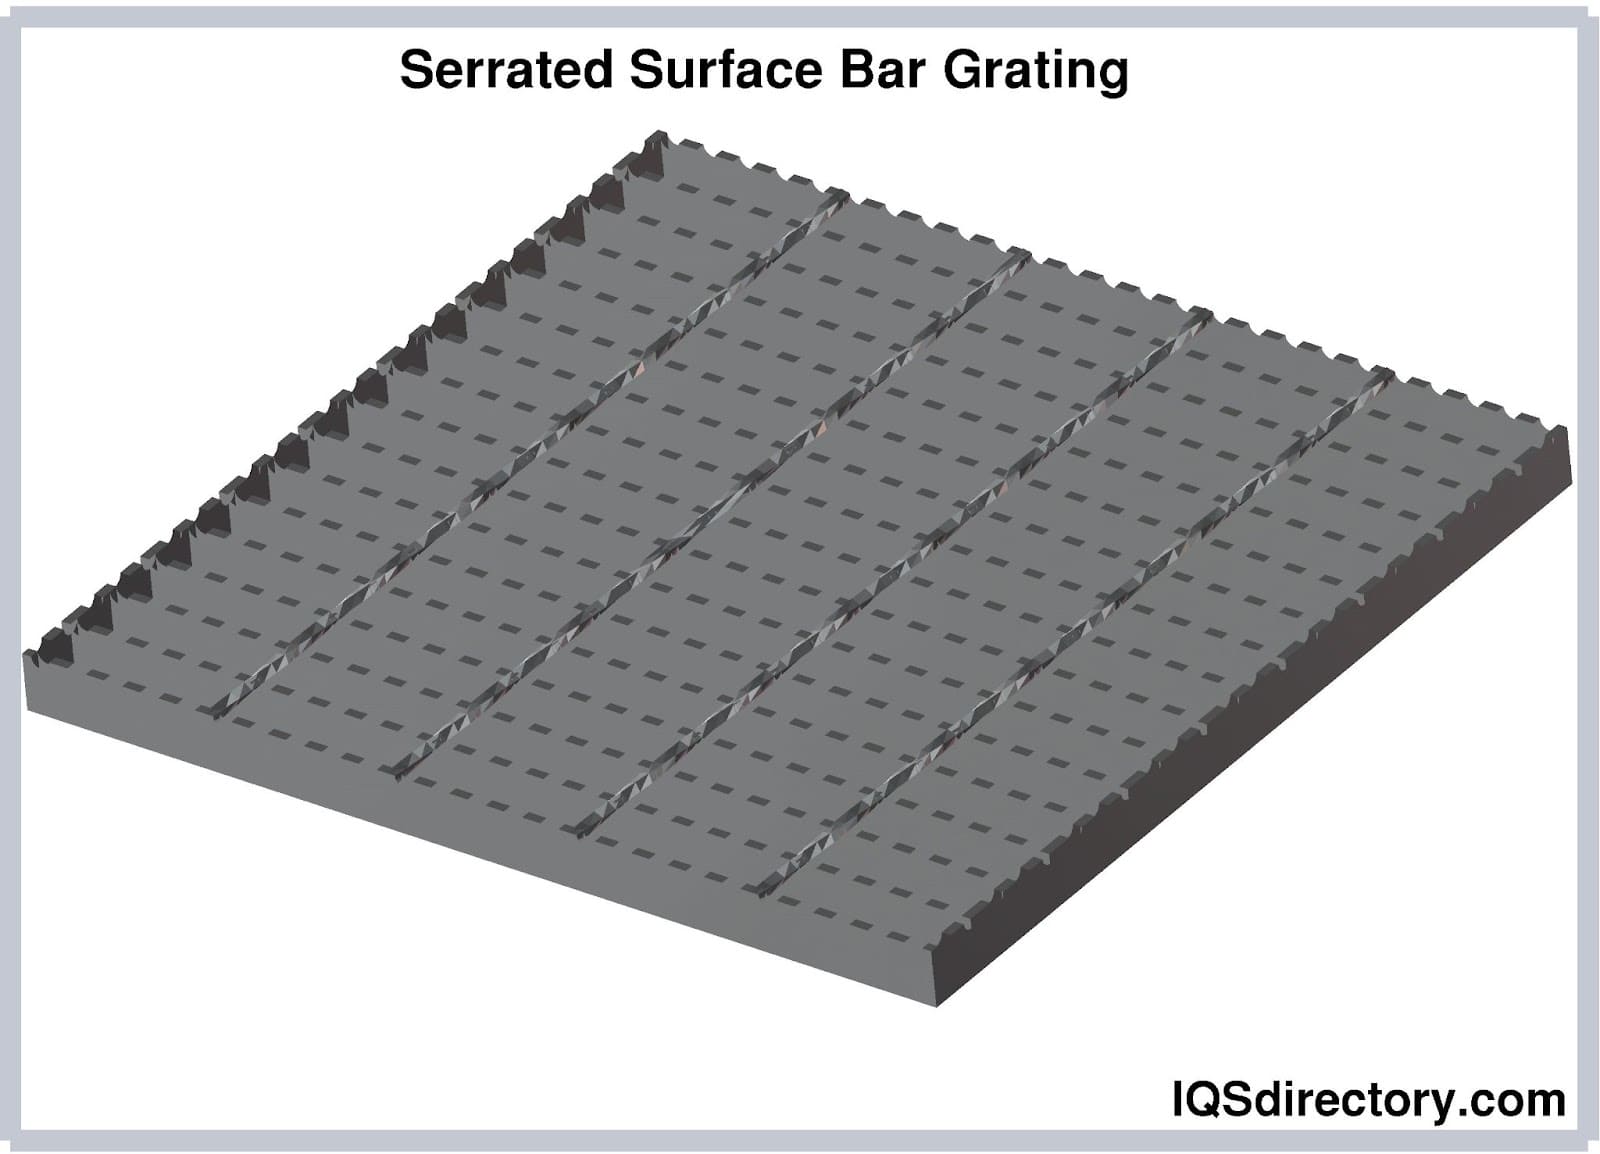 Serrated Surface Bar Grating